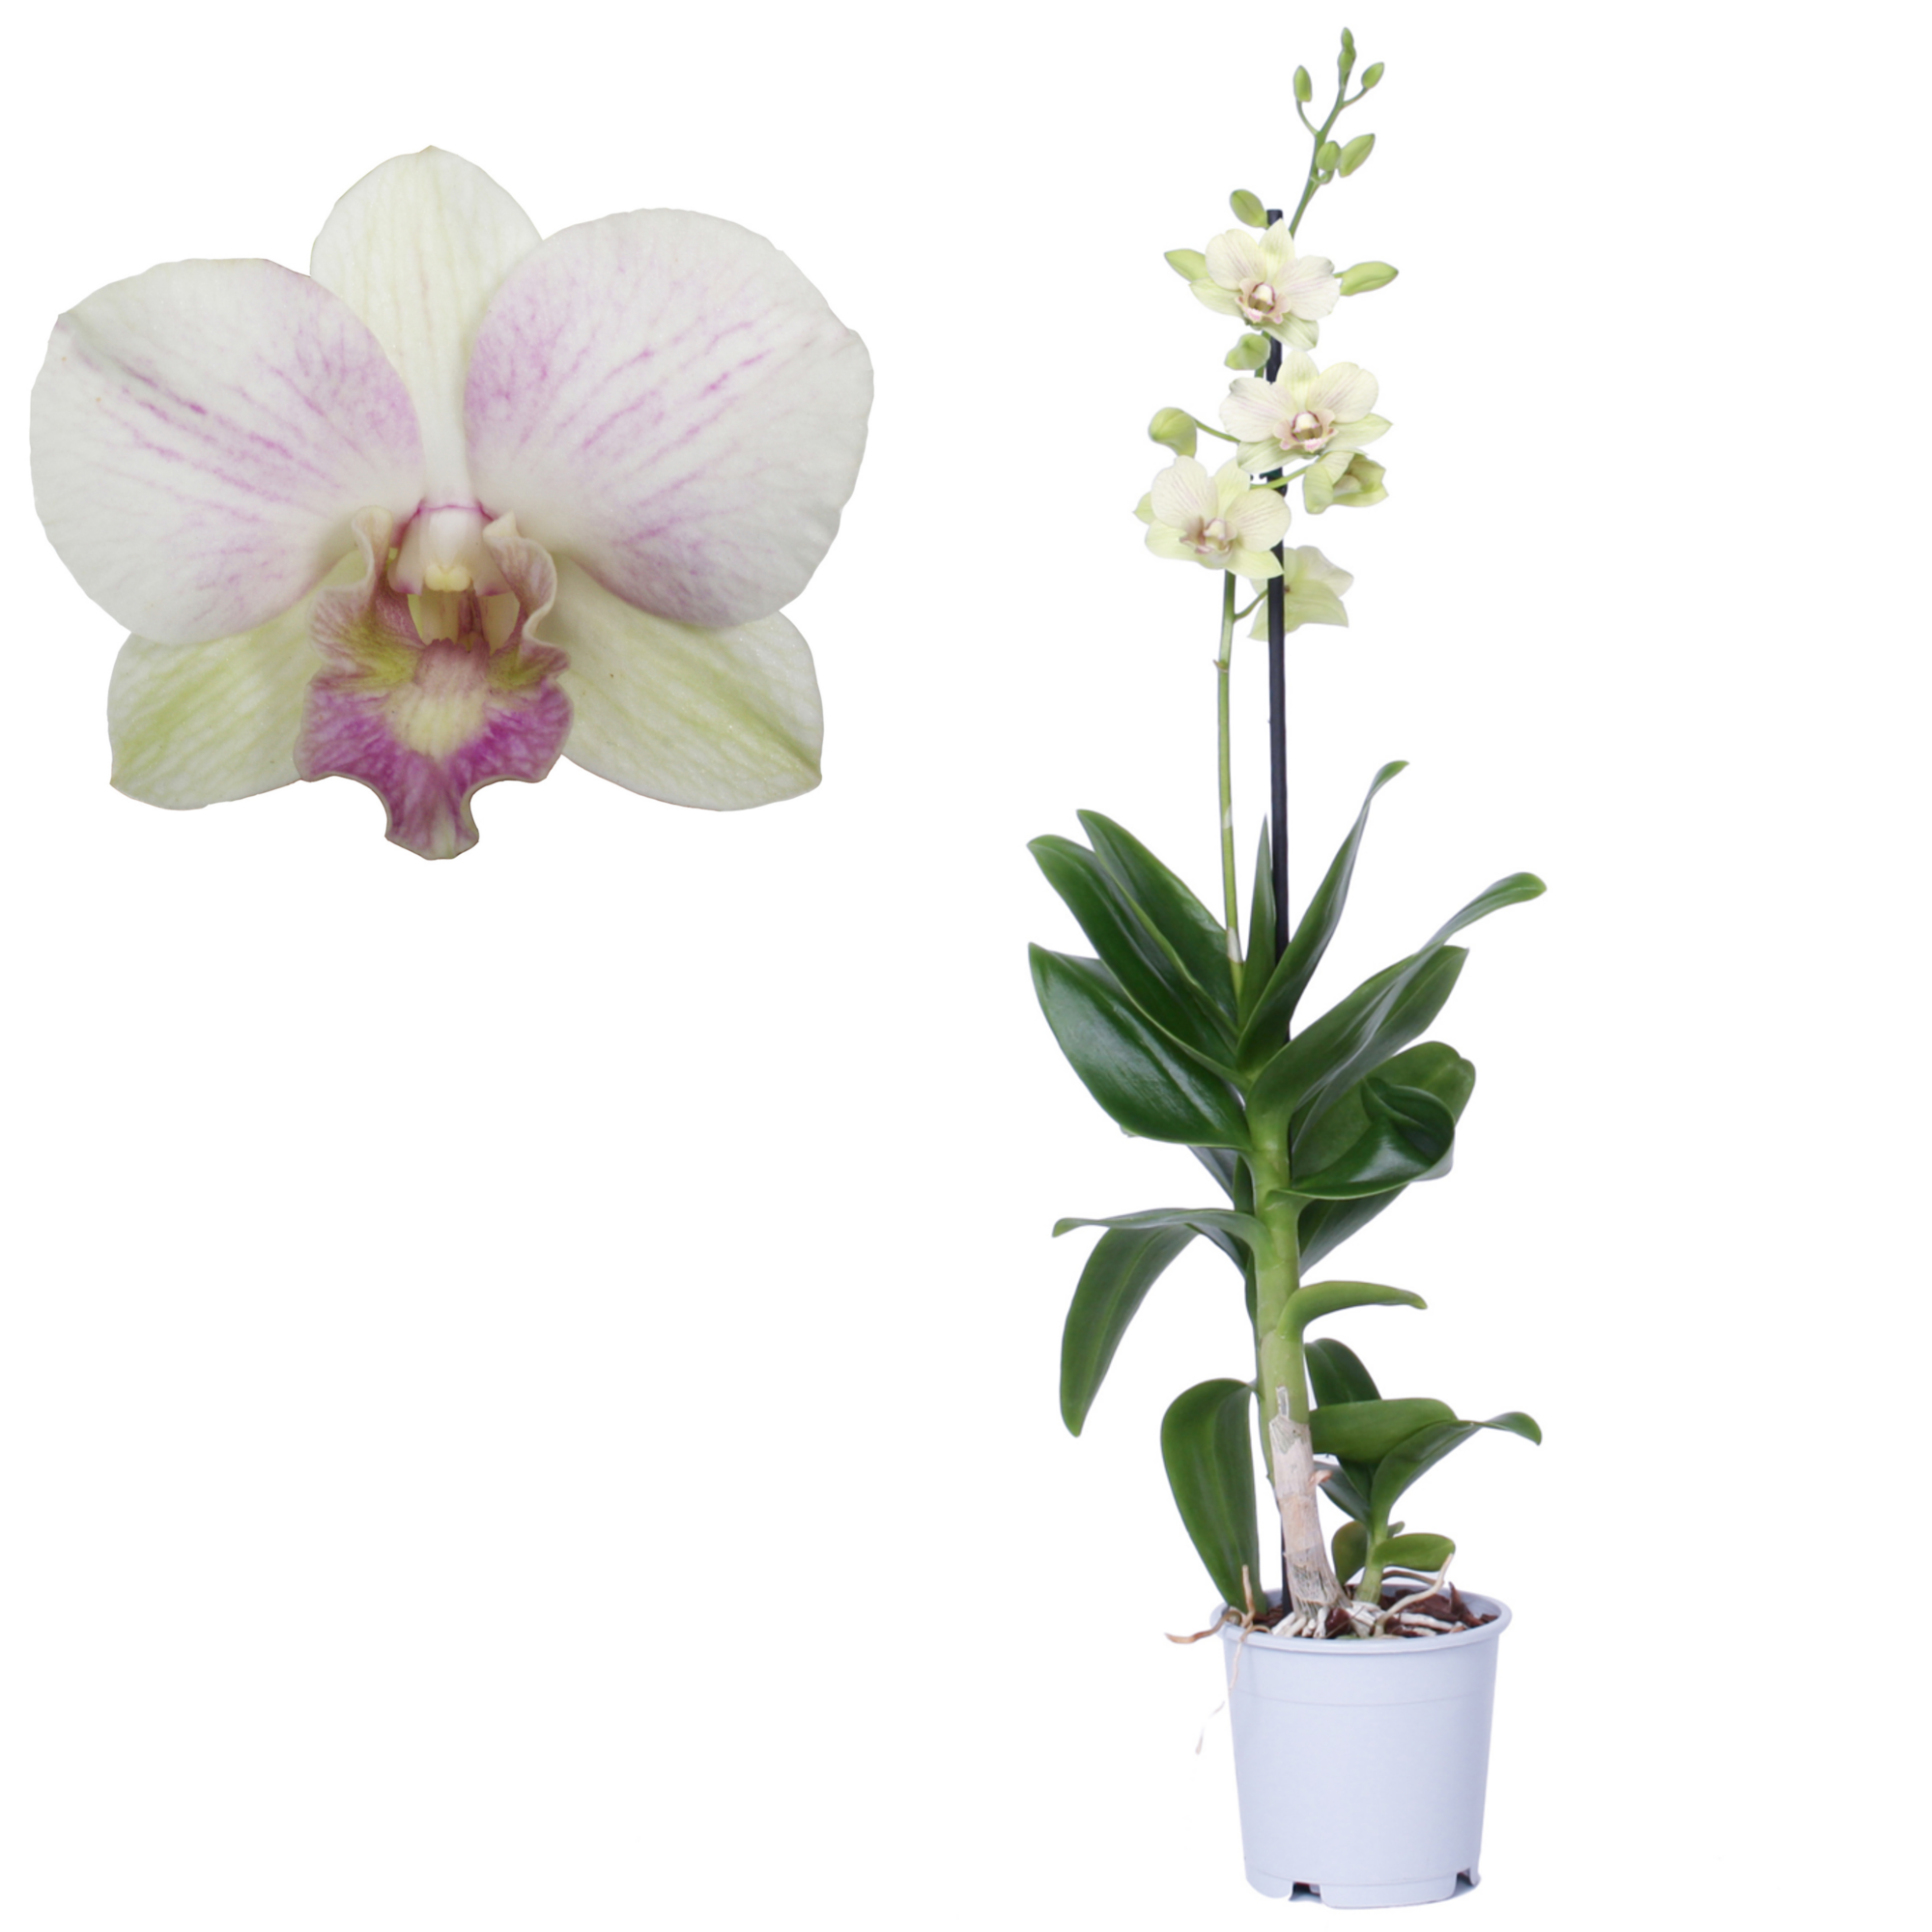 Dendrobium-Orchidee 'Snow Jade' 1 Rispe weiß, 11 cm Topf + product picture